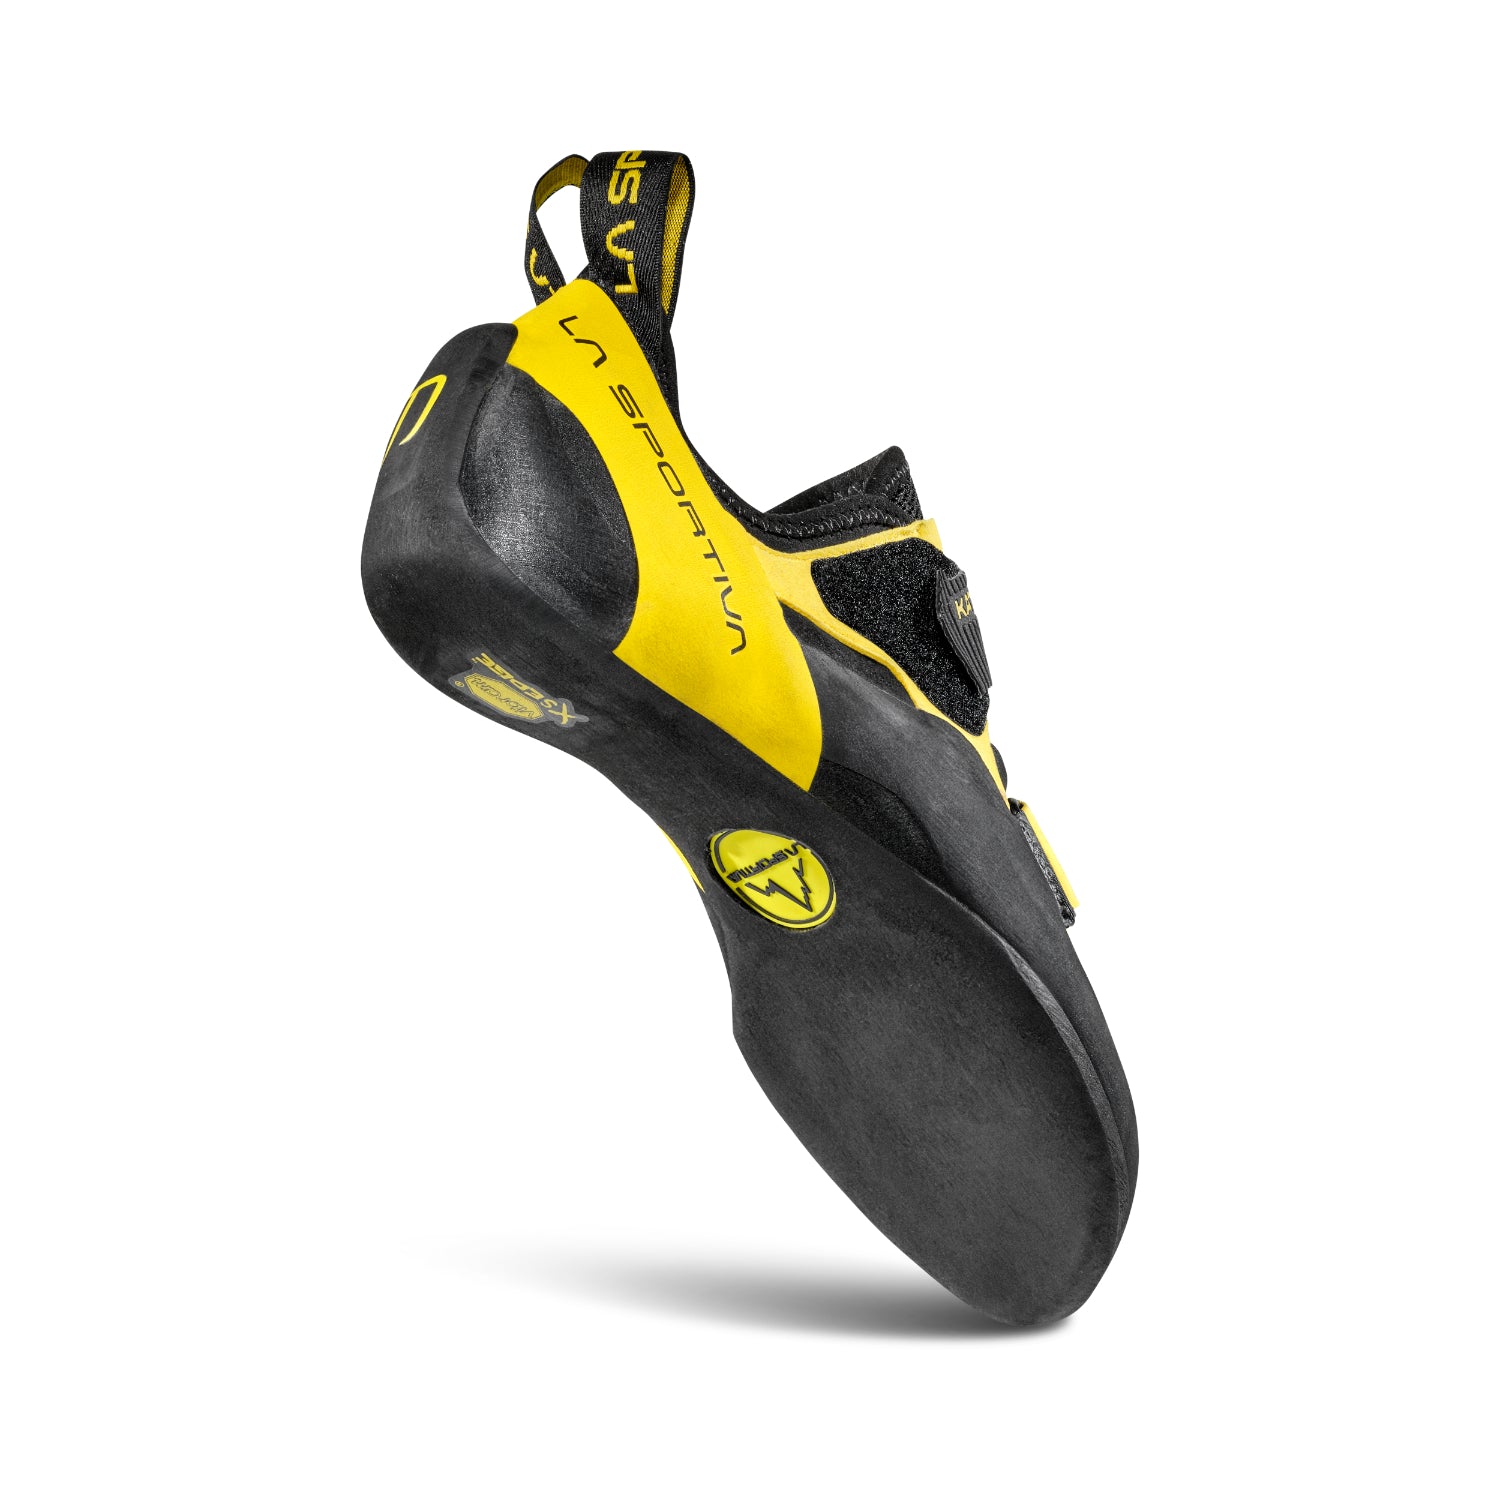 La Sportiva Katana black and yellow with p3 system